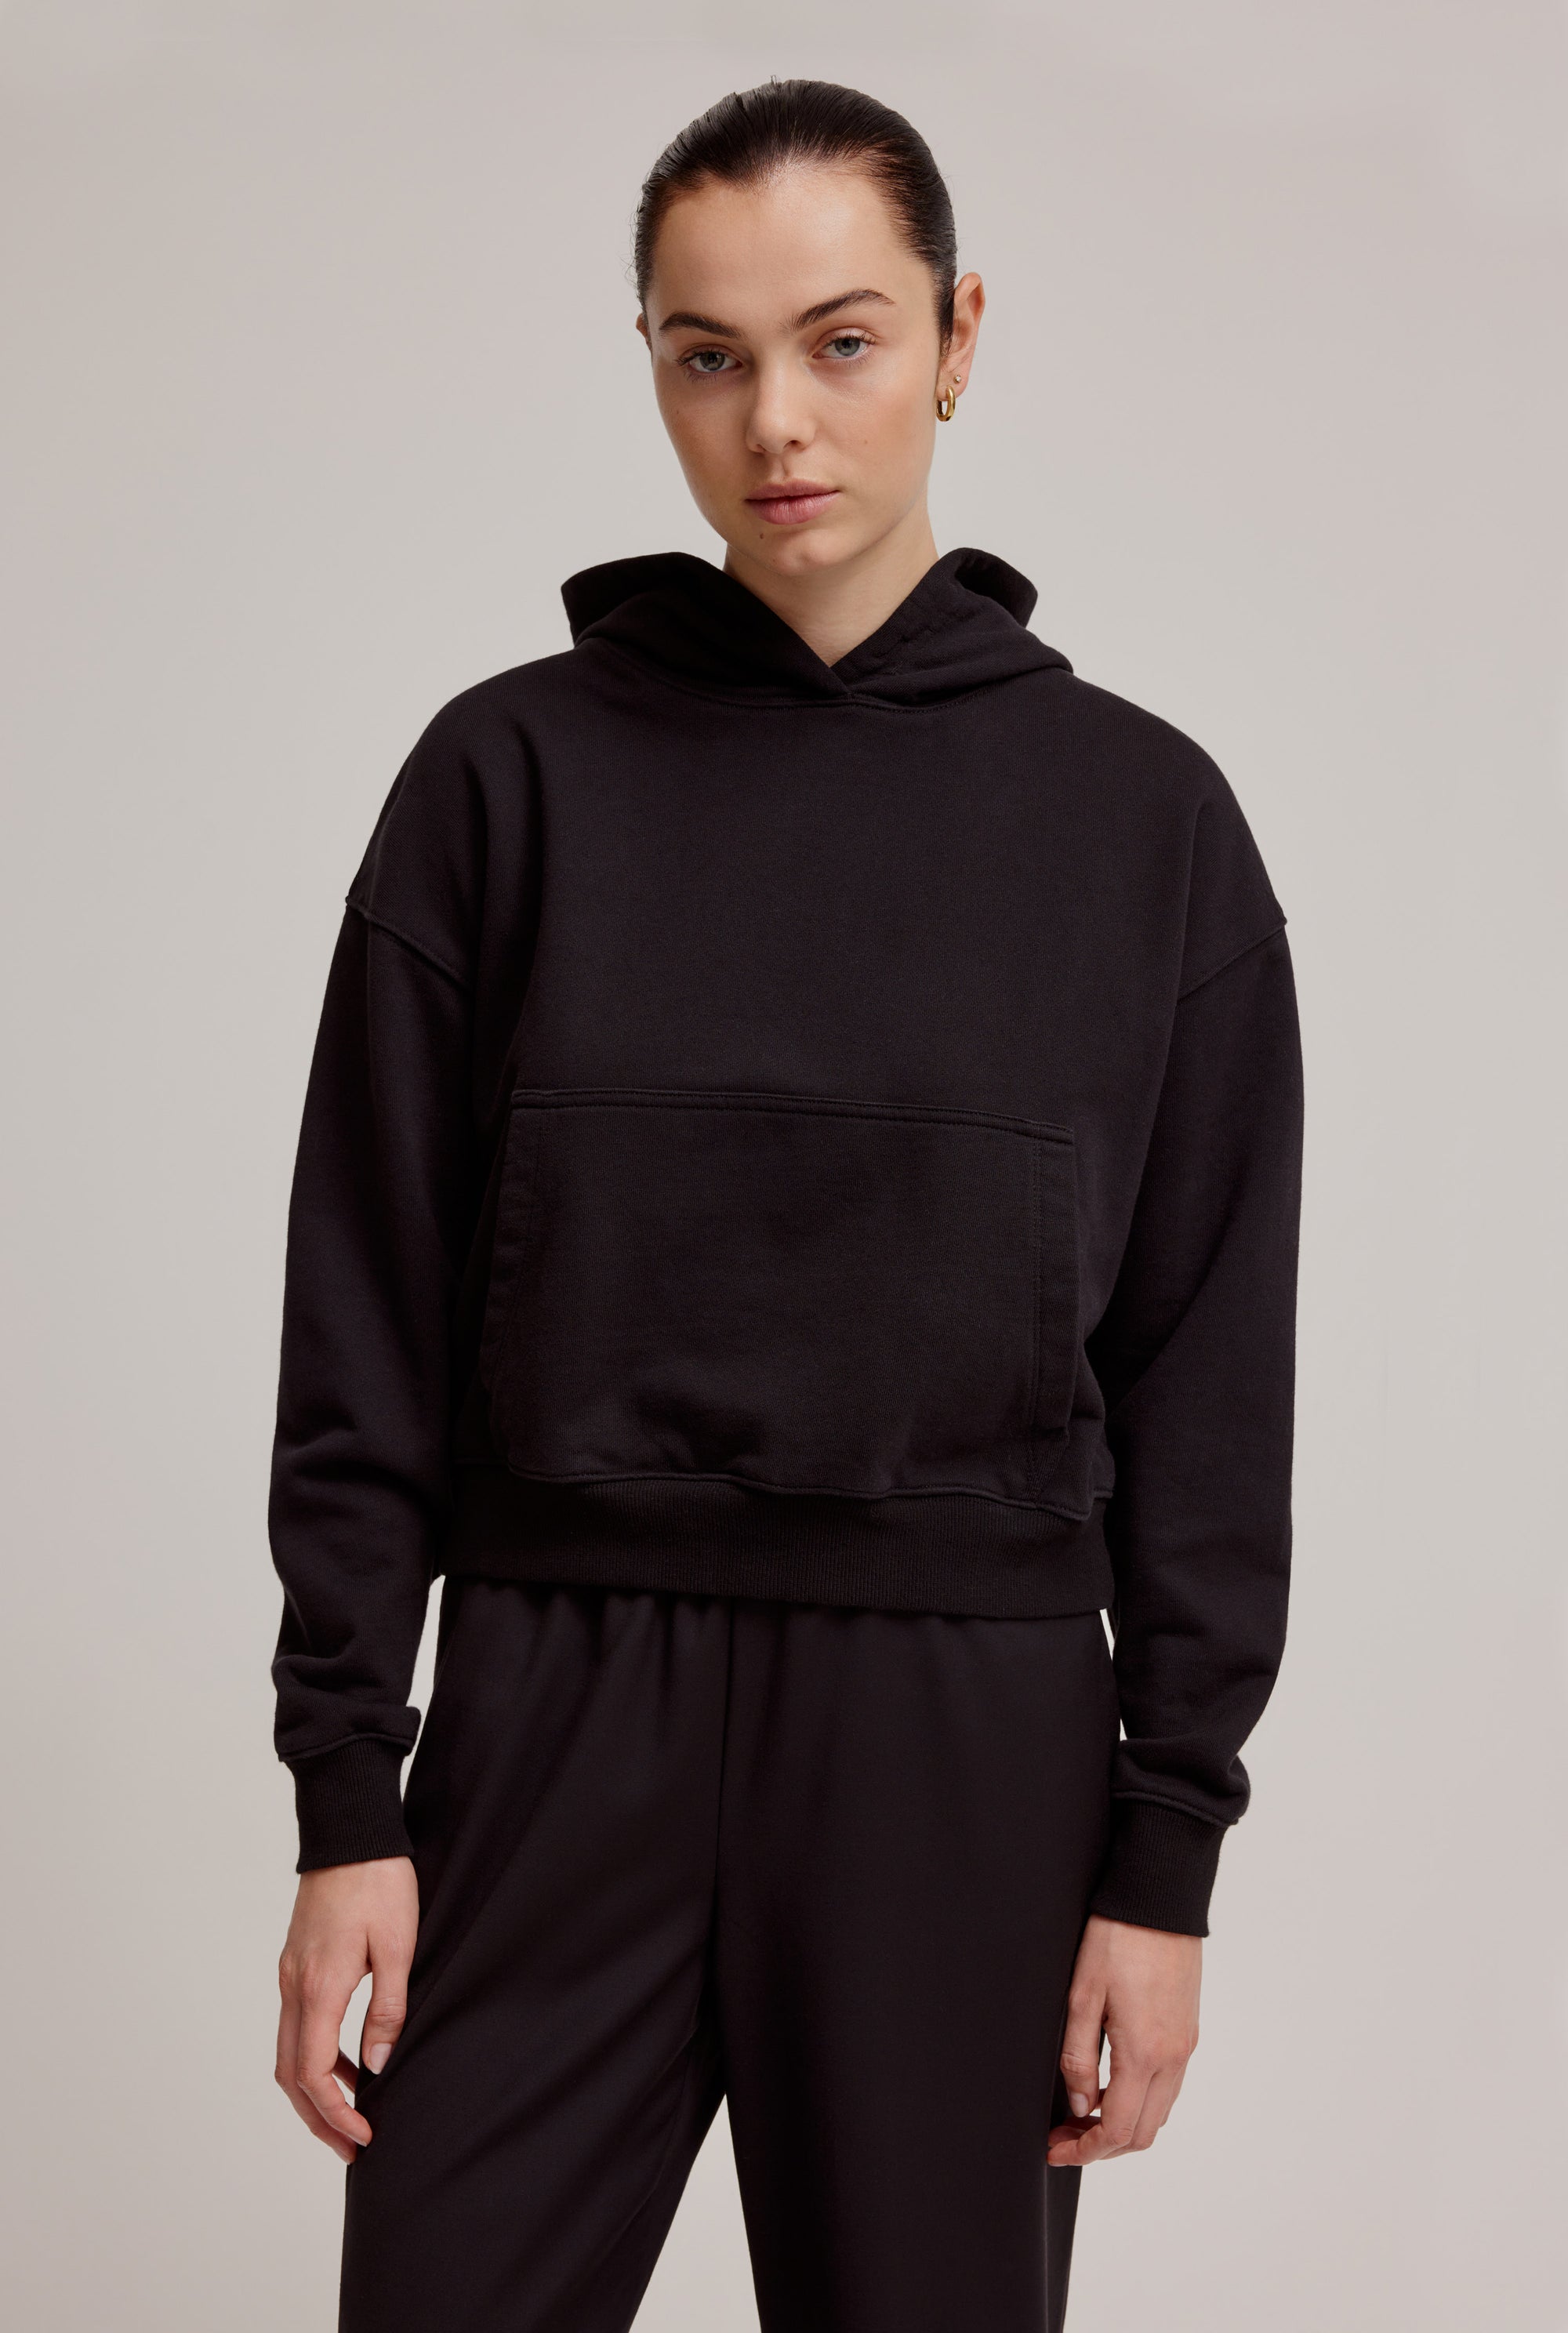 Track Hoodie in Black | Venroy | Premium Leisurewear designed in Australia